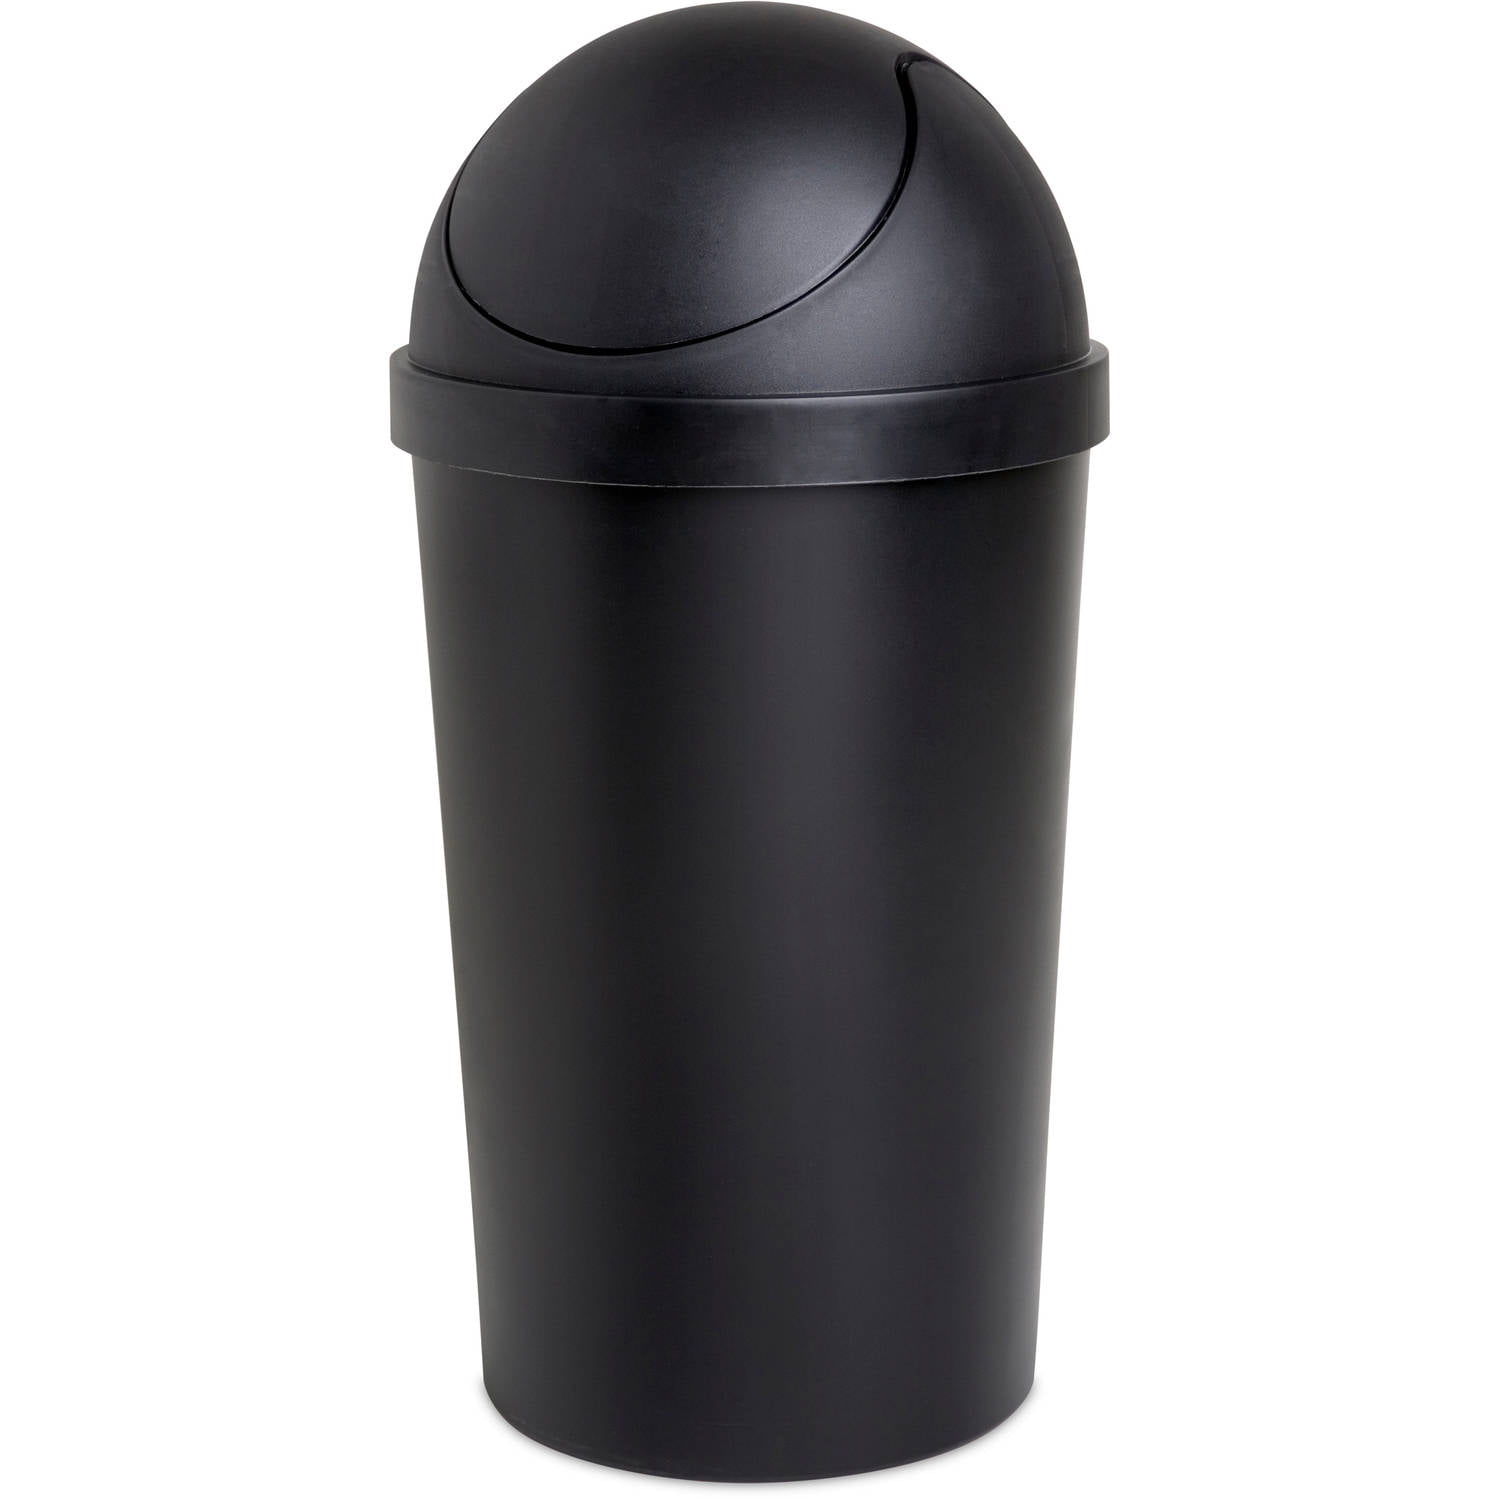 51 Liter Garbage Bin Plastic in Black Swing-Lid Kitchen Trash Can 13.5 Gallon 